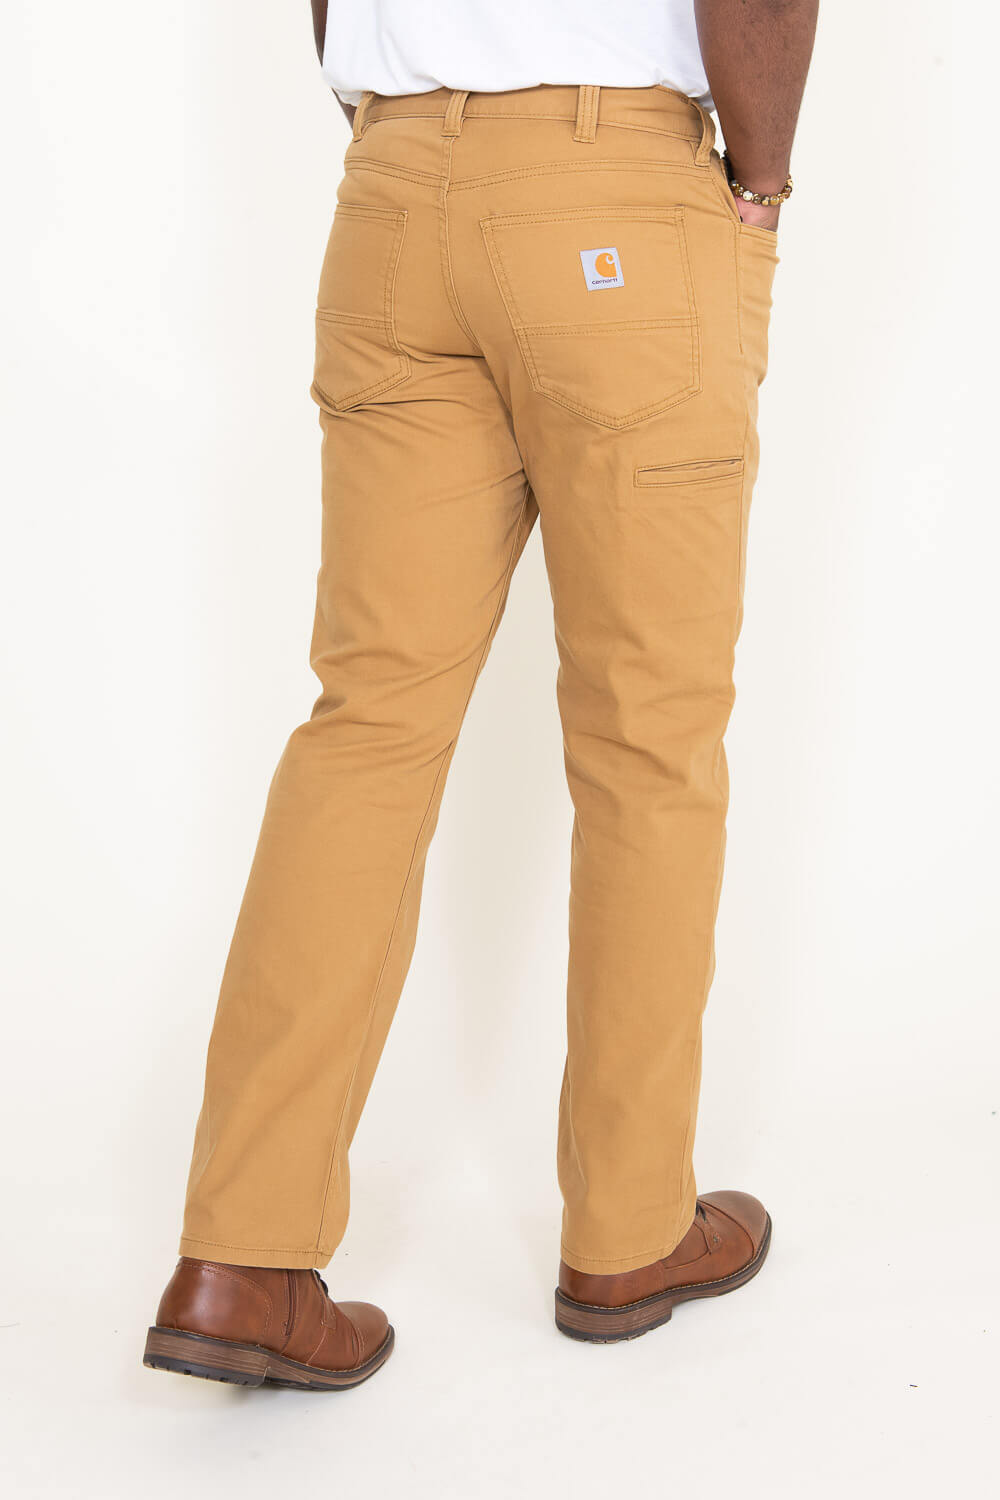 Carhartt Rugged Flex Pants for Men in Brown